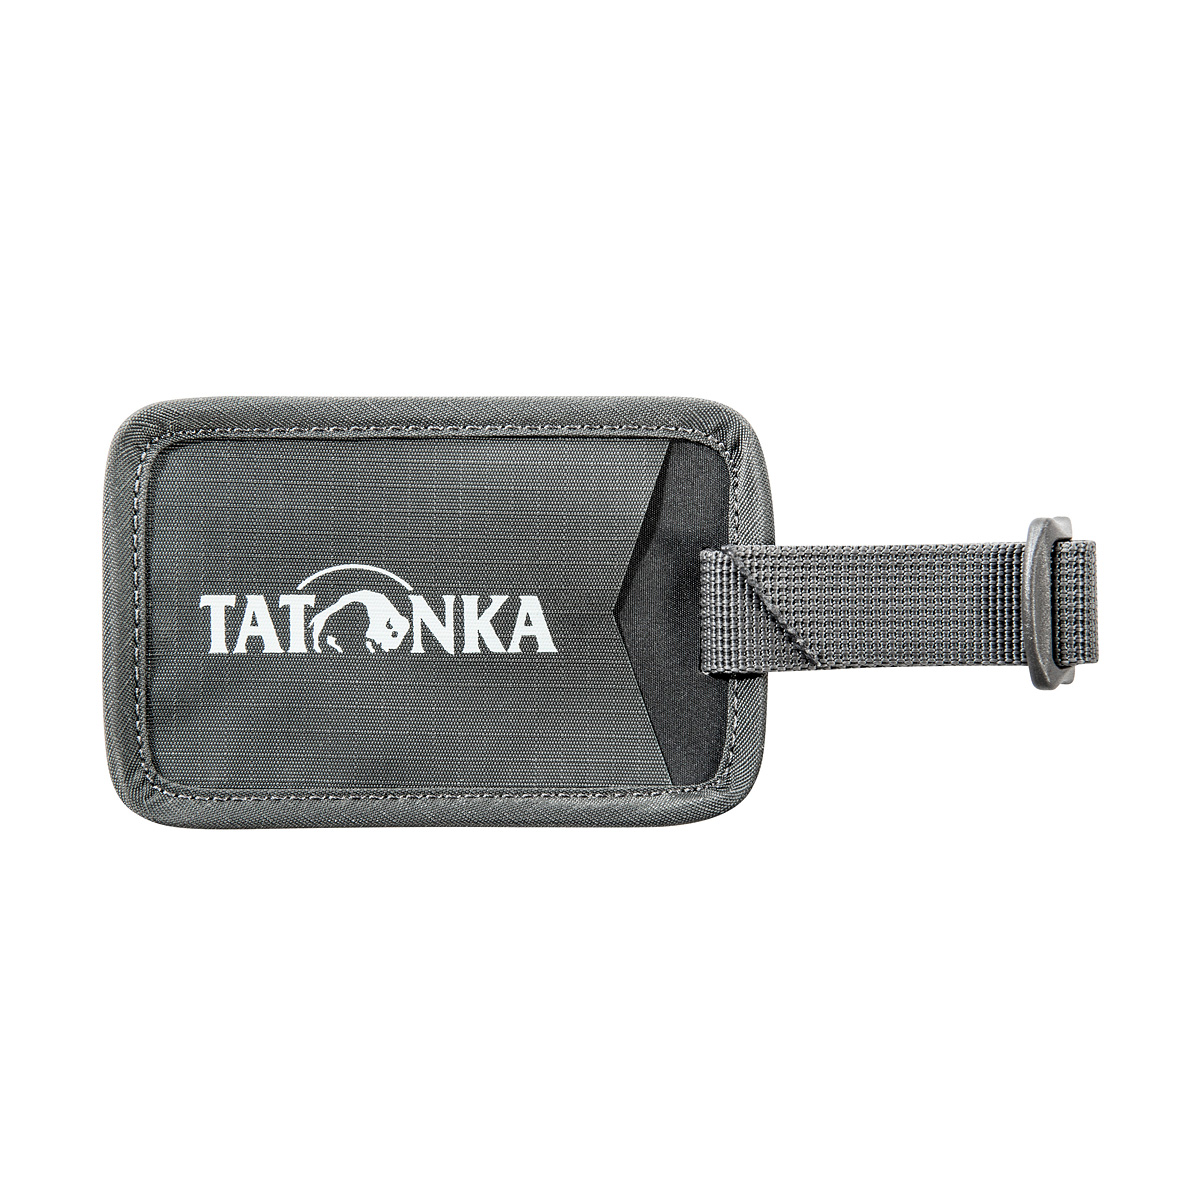 Tatonka Travel Name Tag titan grey grau Rucksack-Zubehör 4013236270501